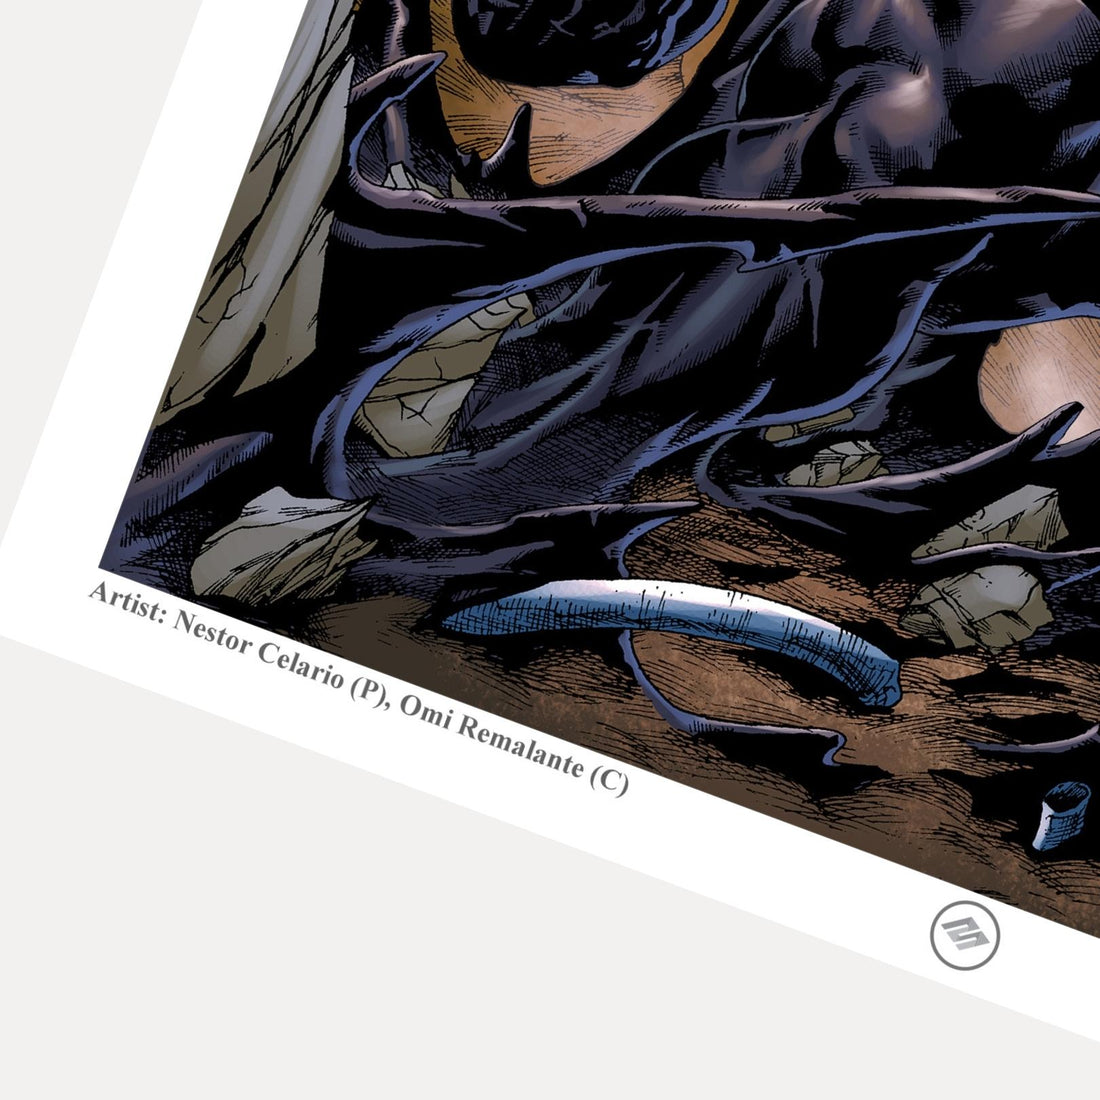 Spiderman vs Venom and Carnage-16x24 Giclée Art Print